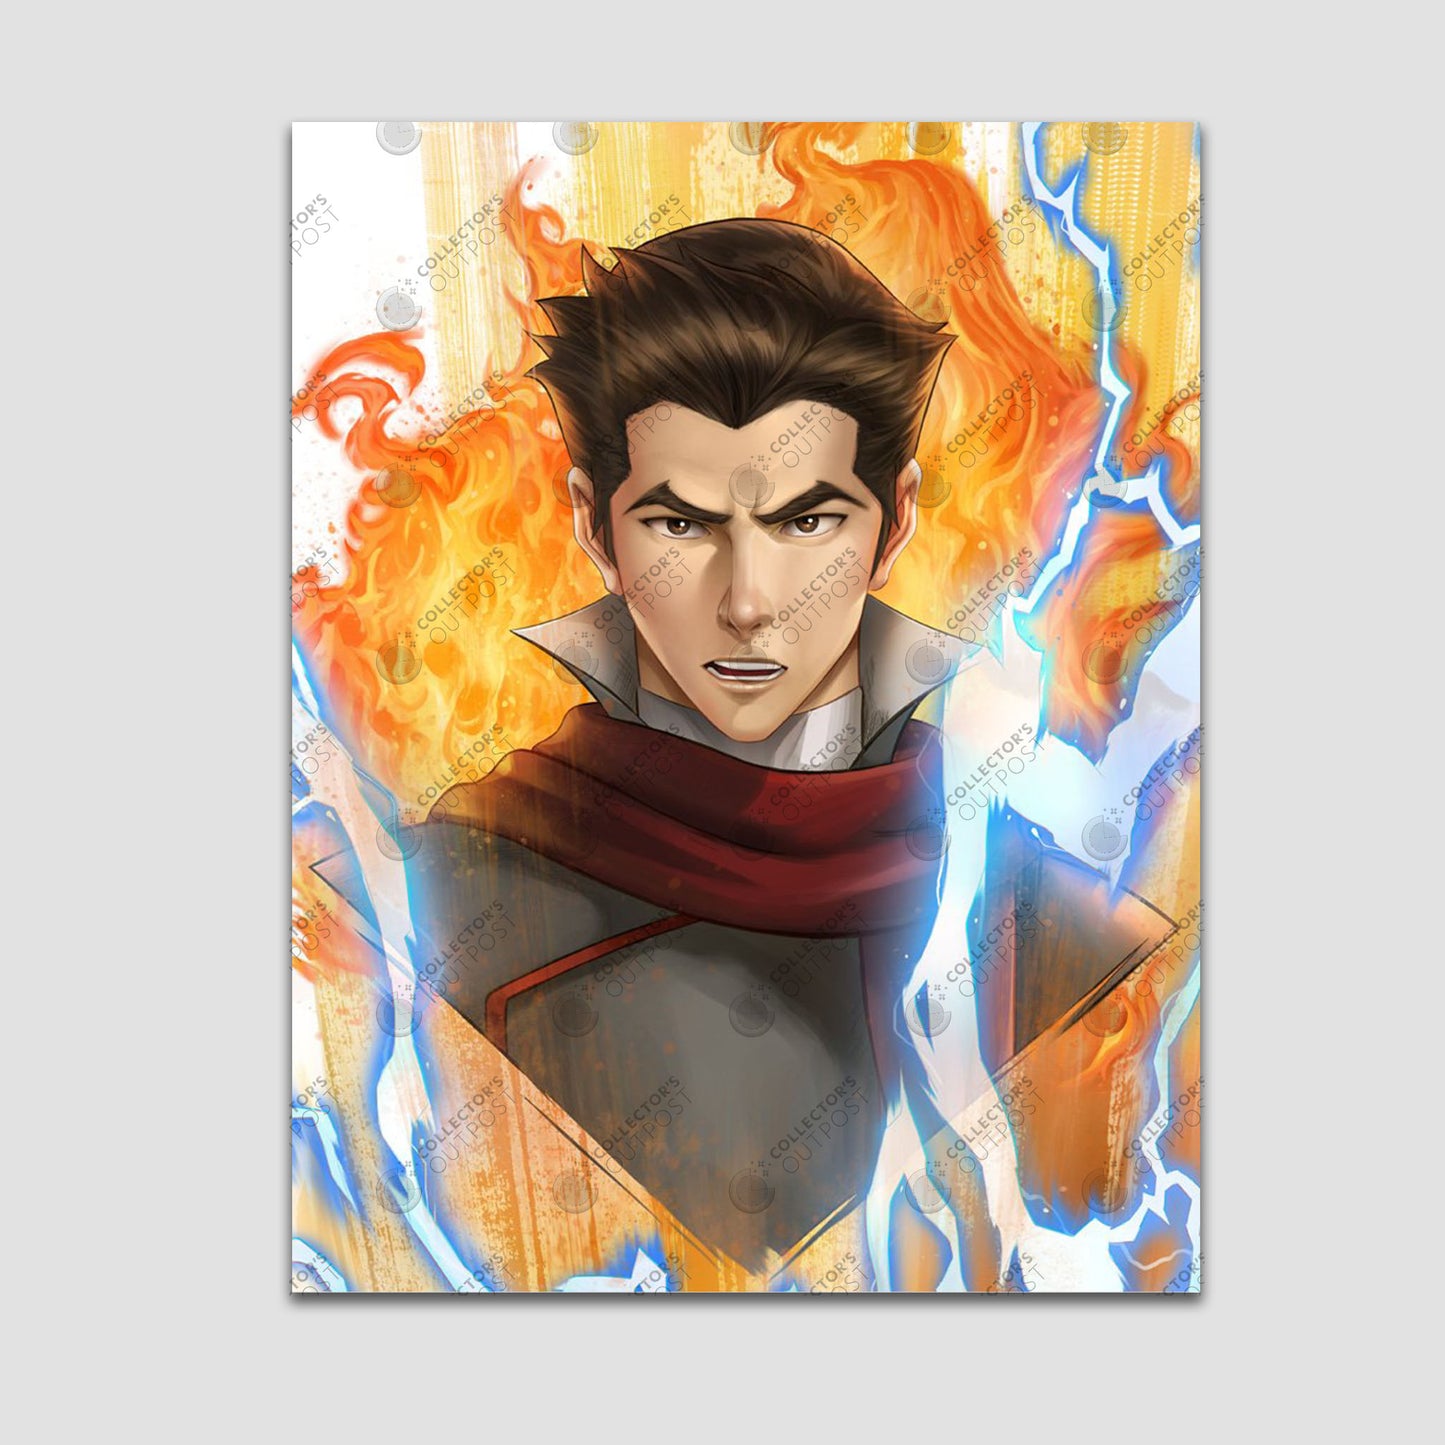 Mako "Fire Brother" (Avatar: The Legend of Korra) Legacy Portrait Art Print